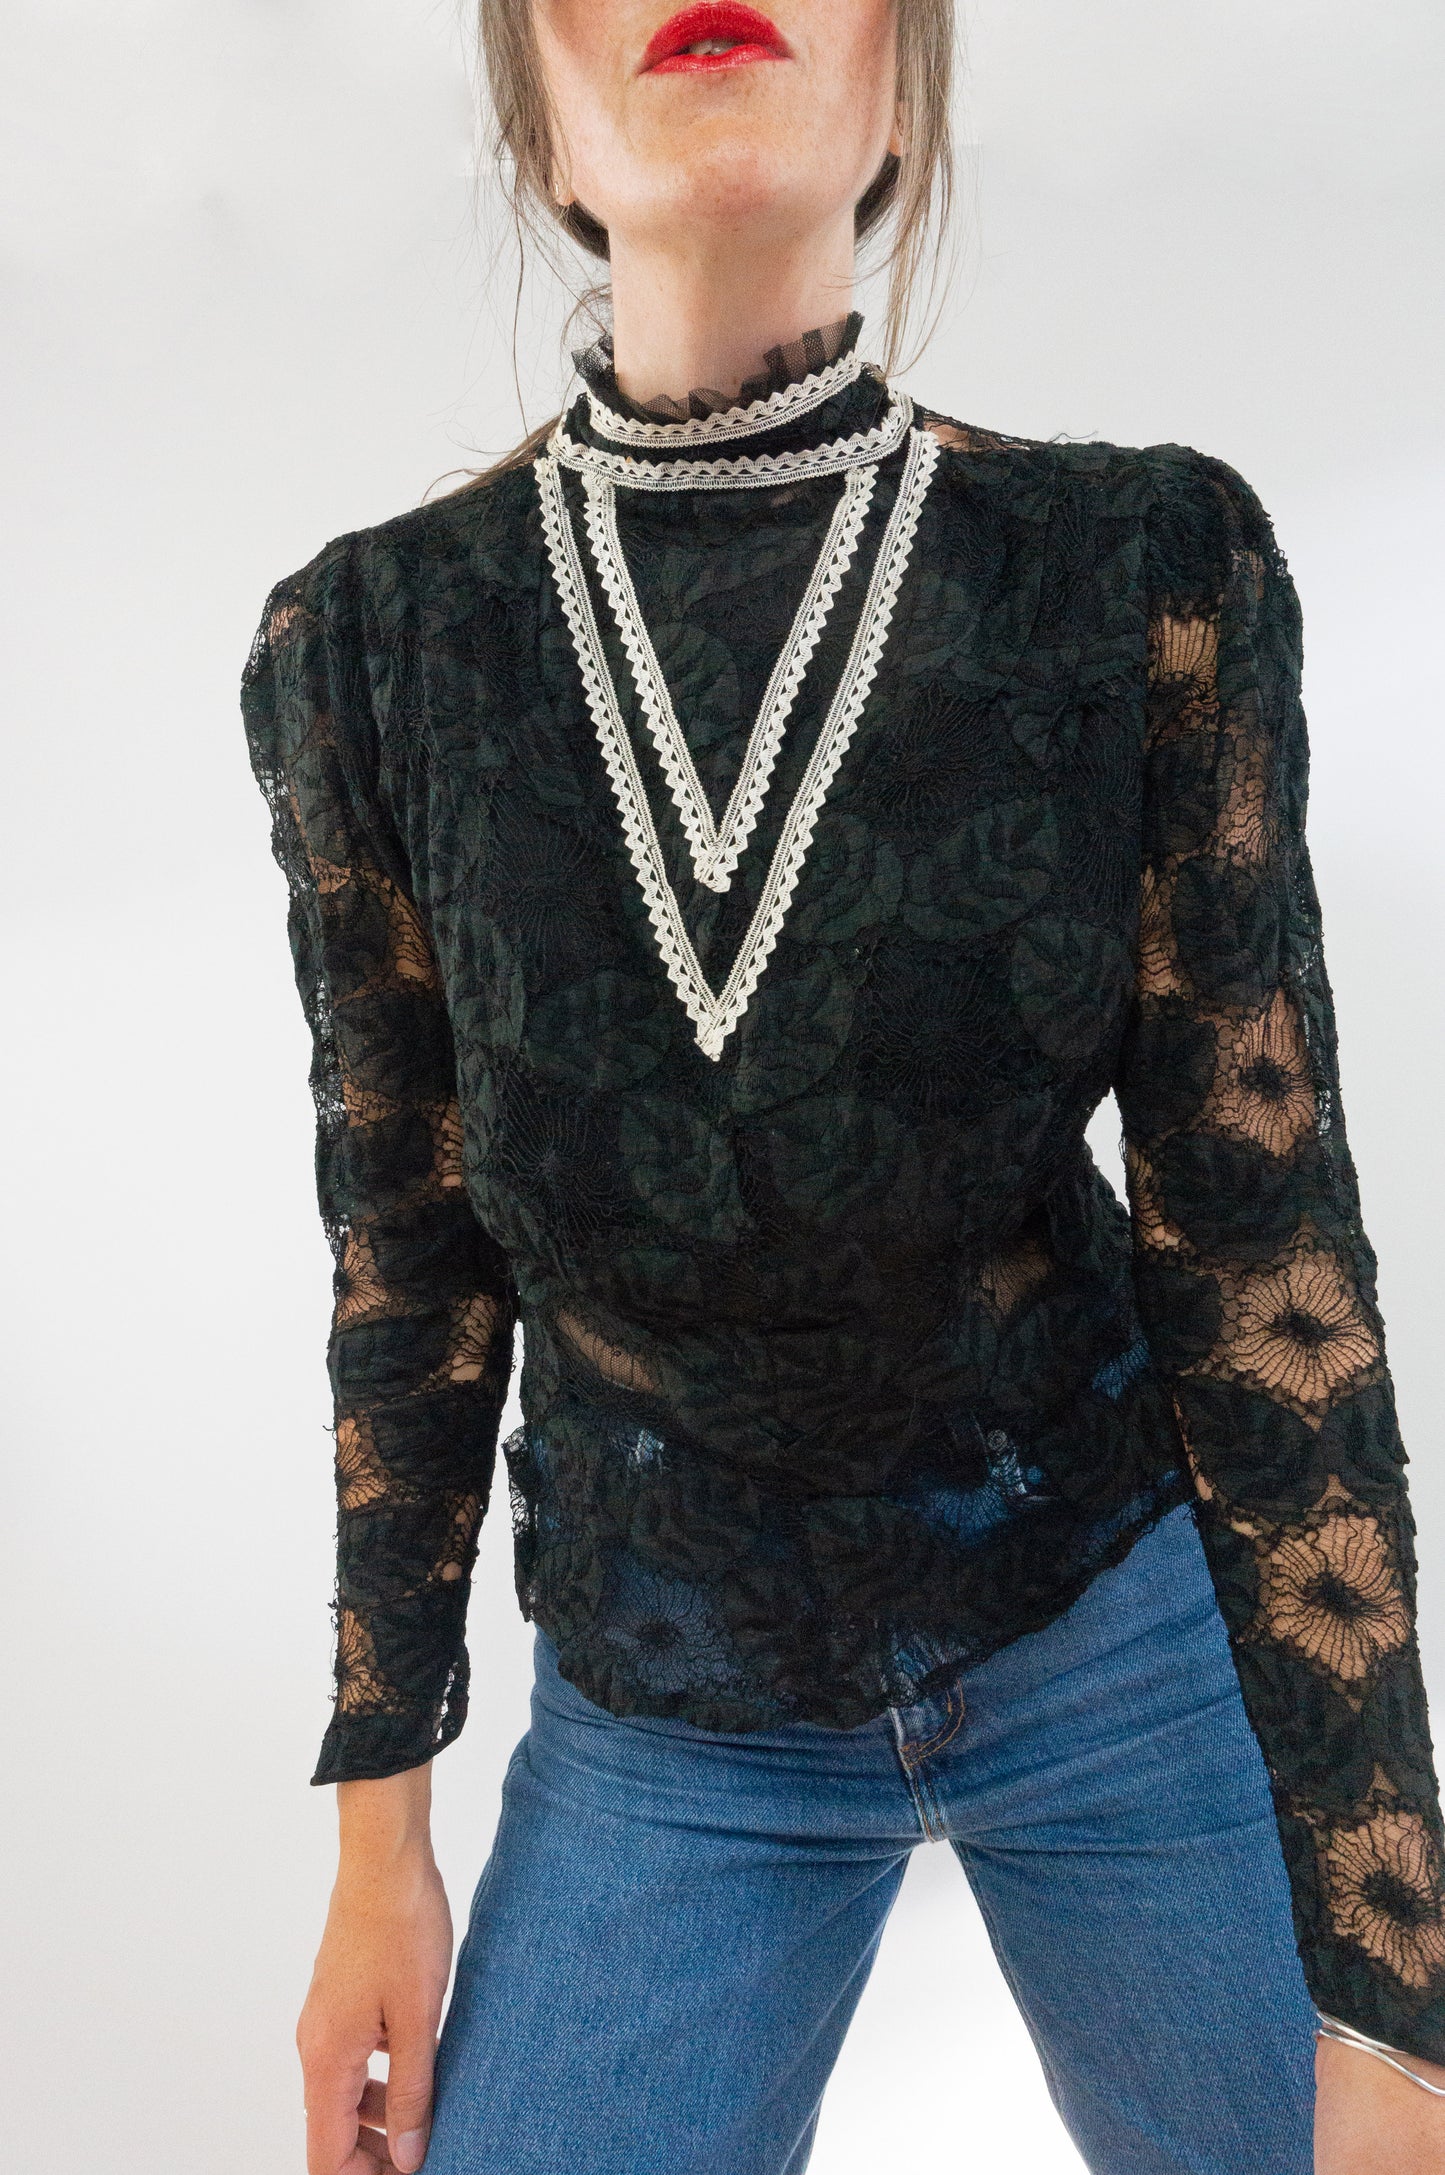 Antique Edwardian Black Lace sheer blouse